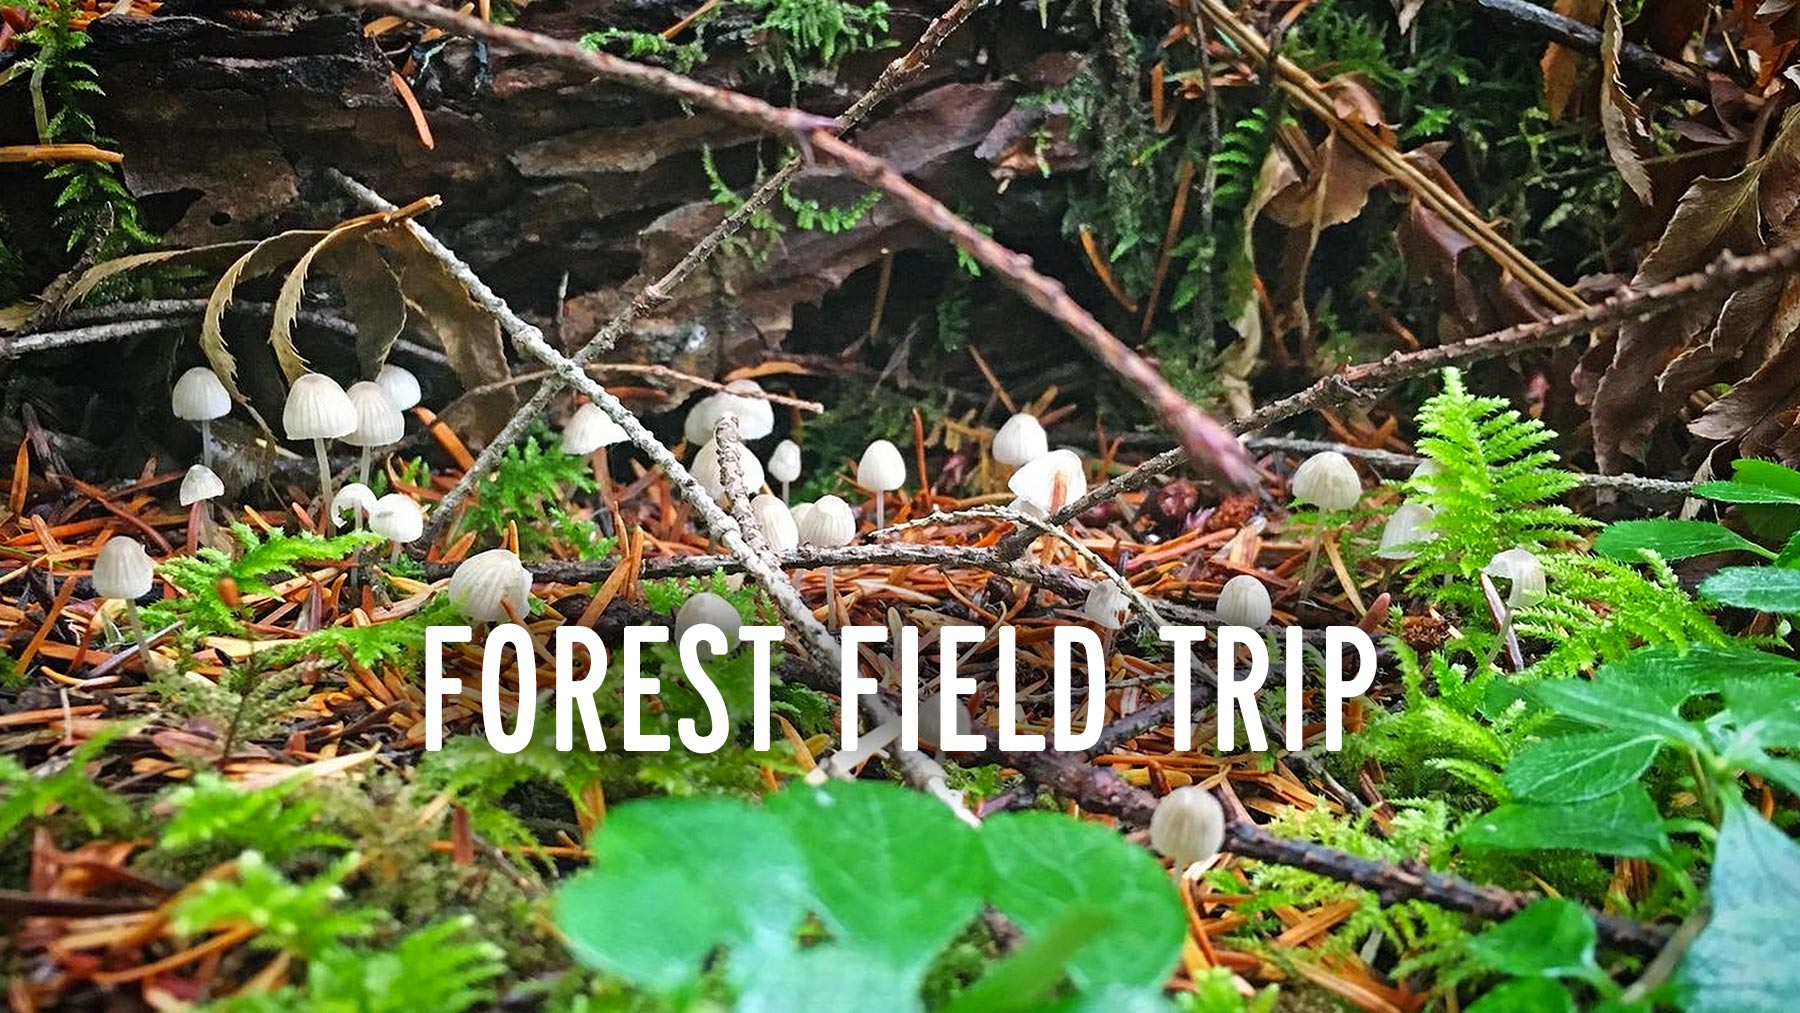 Forest field trip